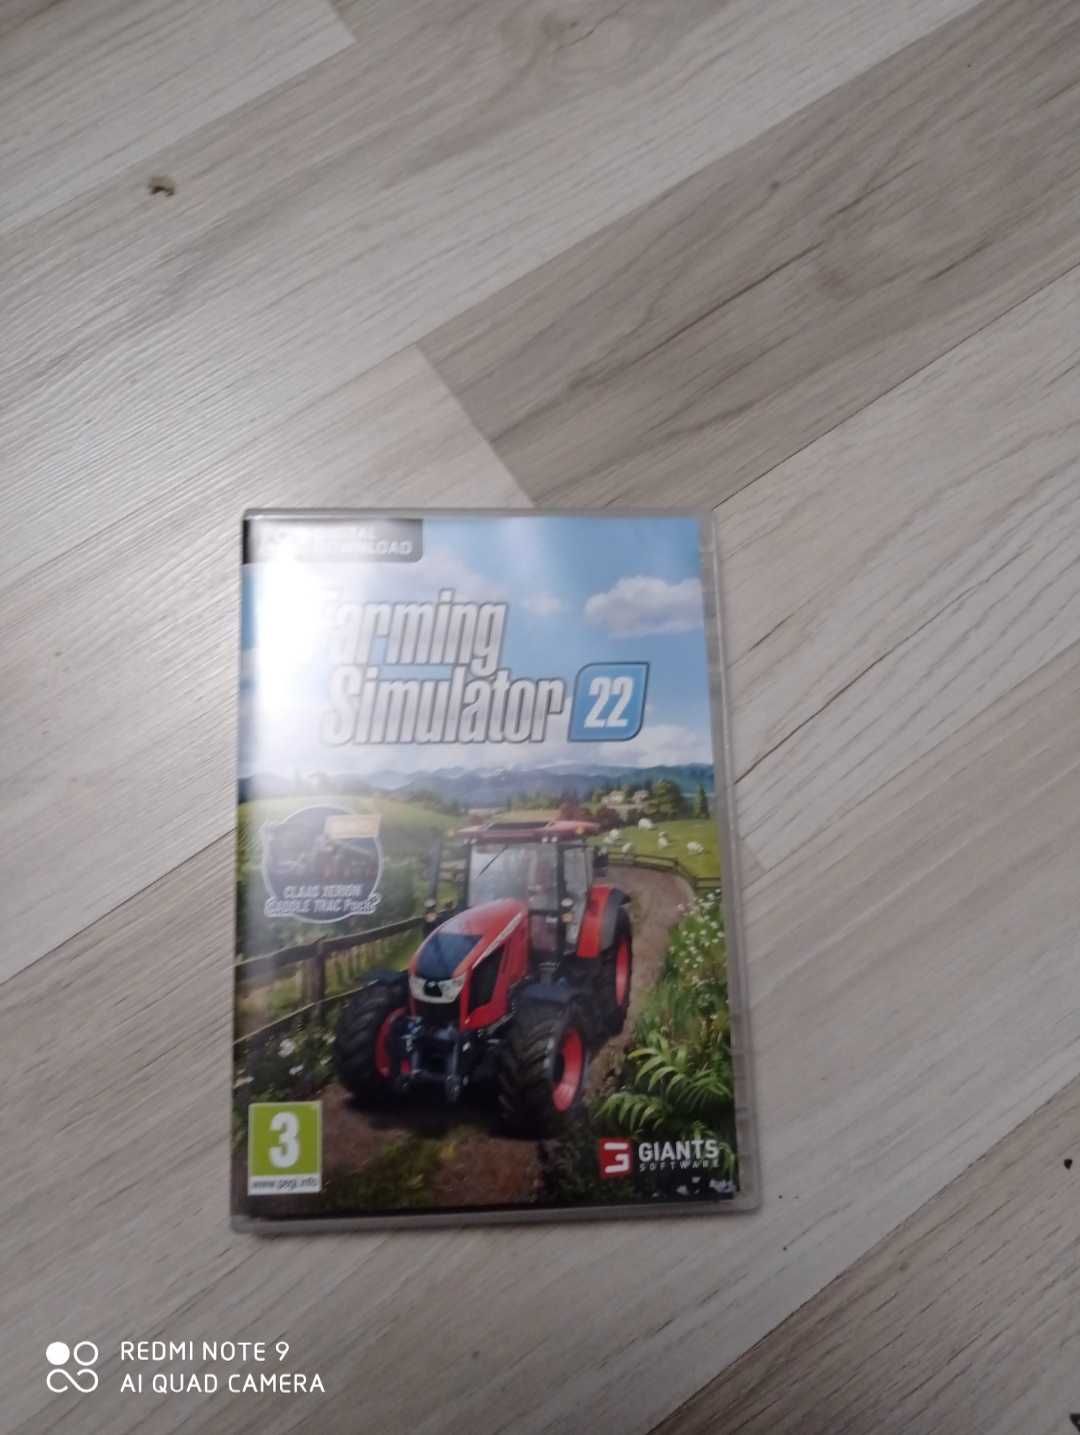 Farming symulator 22